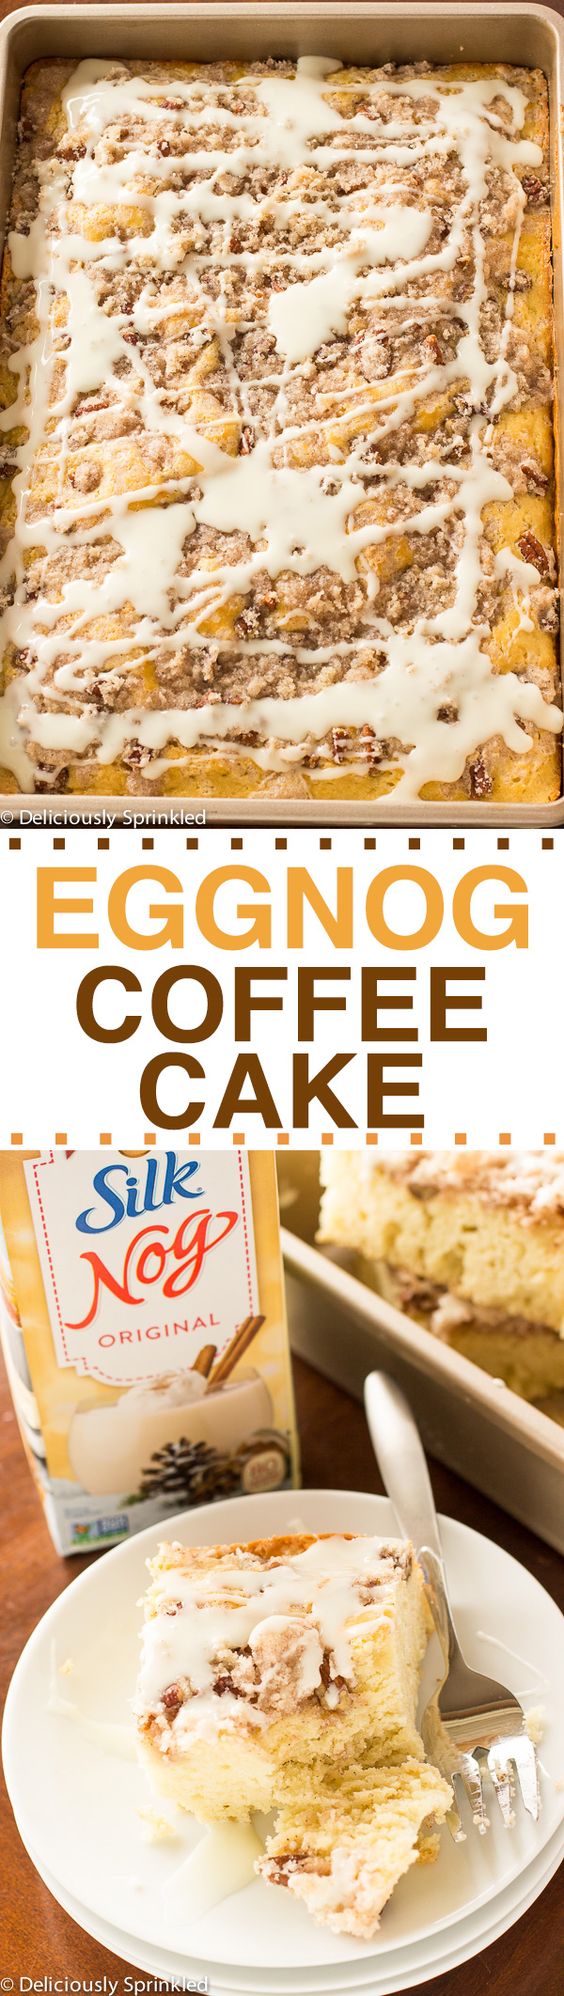 Eggnog Coffee Cake - Deliciously Sprinkled